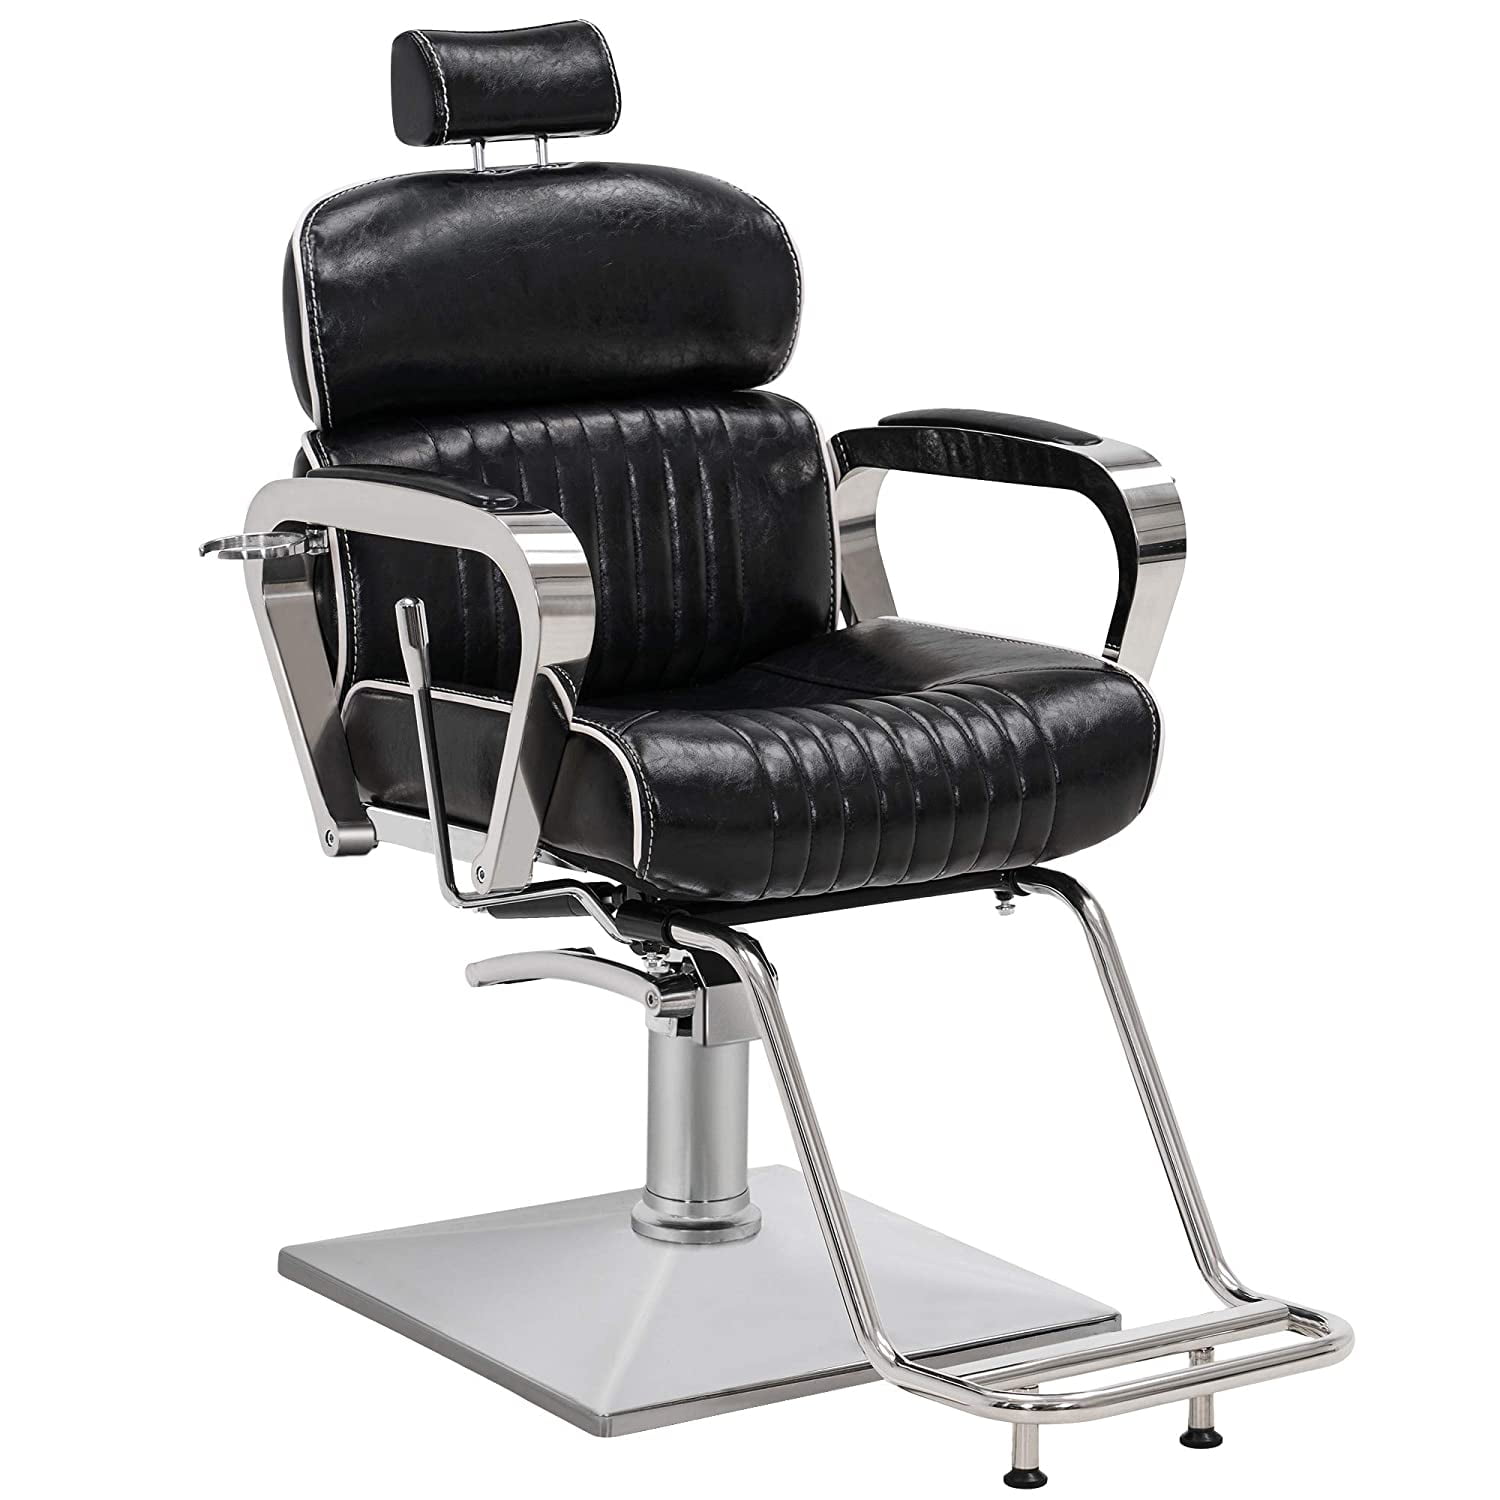 BarberPub Vintage  Salon  Chair  Hydraulic Beauty Spa Styling  